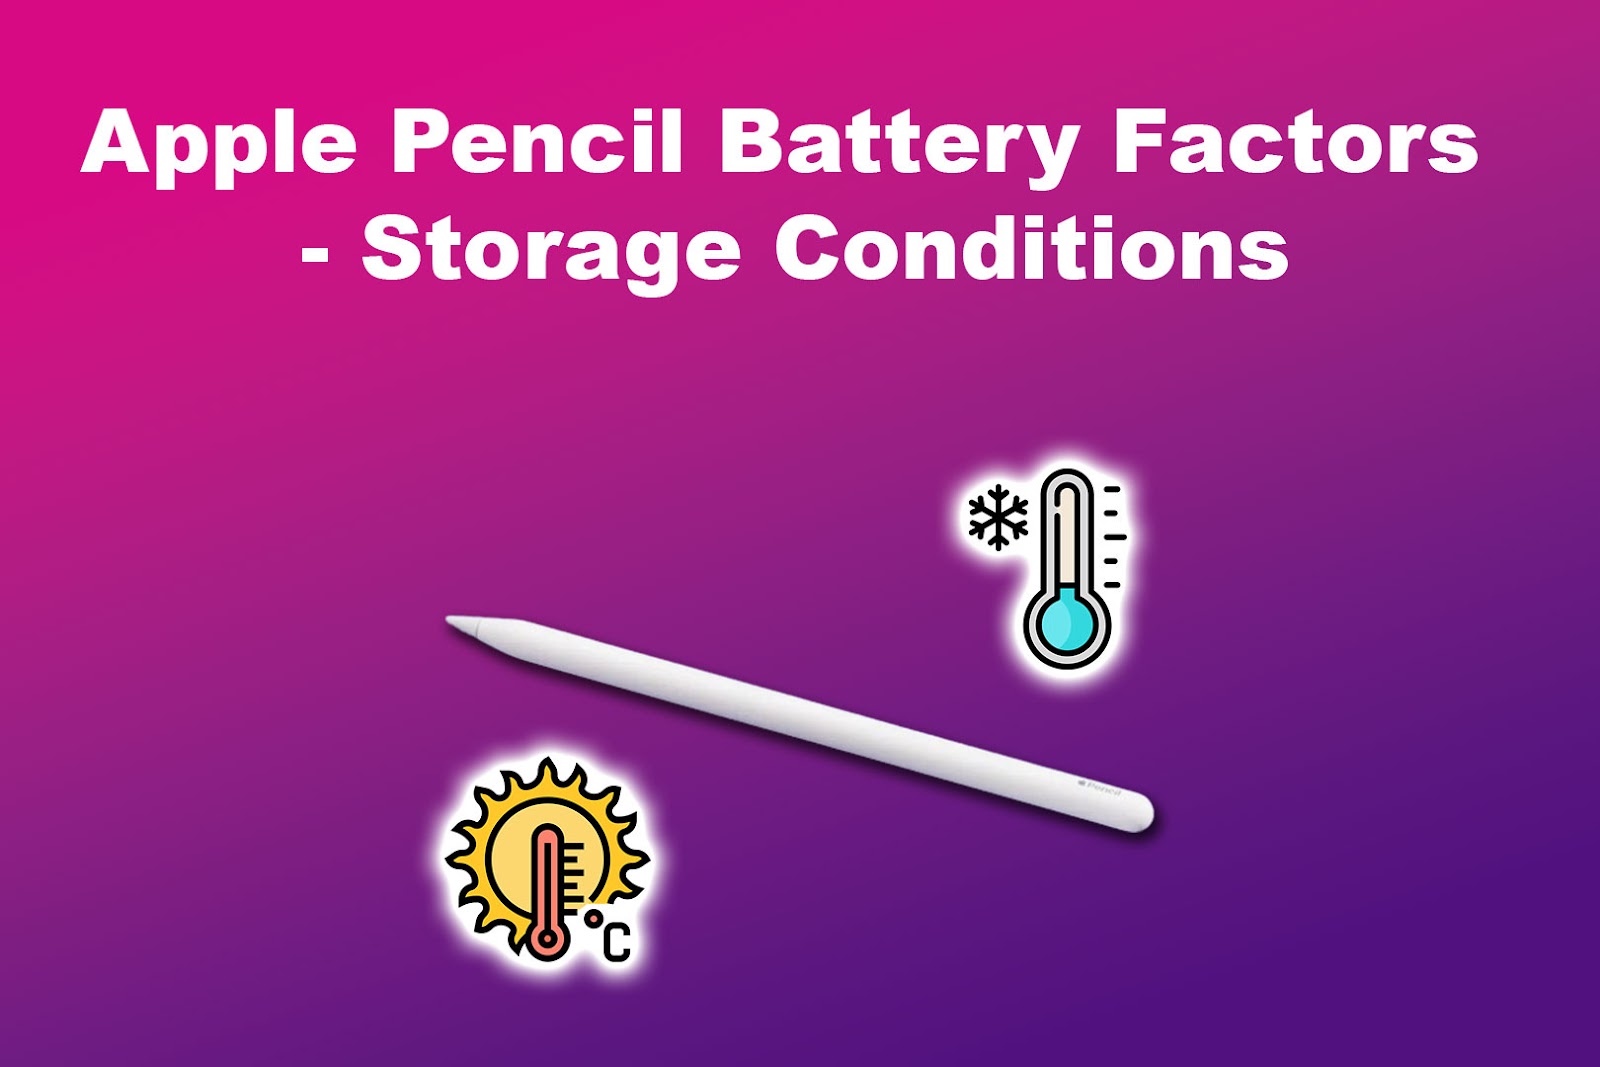 Apple Pencil Battery Factors - Storage Conditions